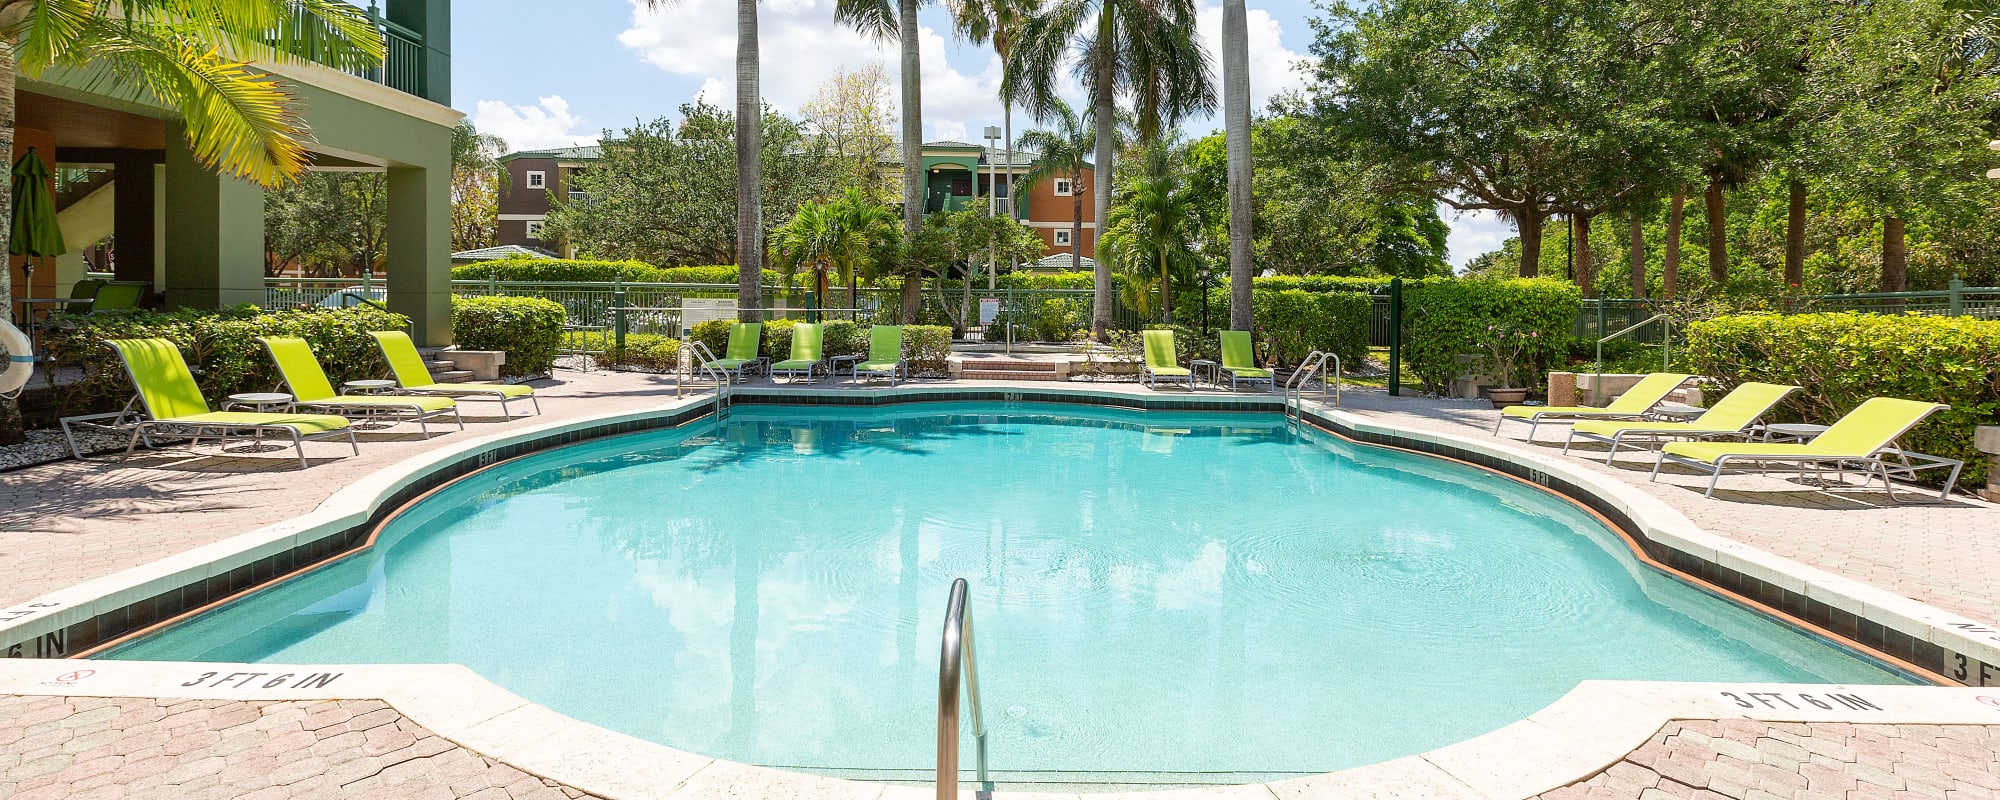 Apartments at Club Mira Lago Apartments in Coral Springs, Florida